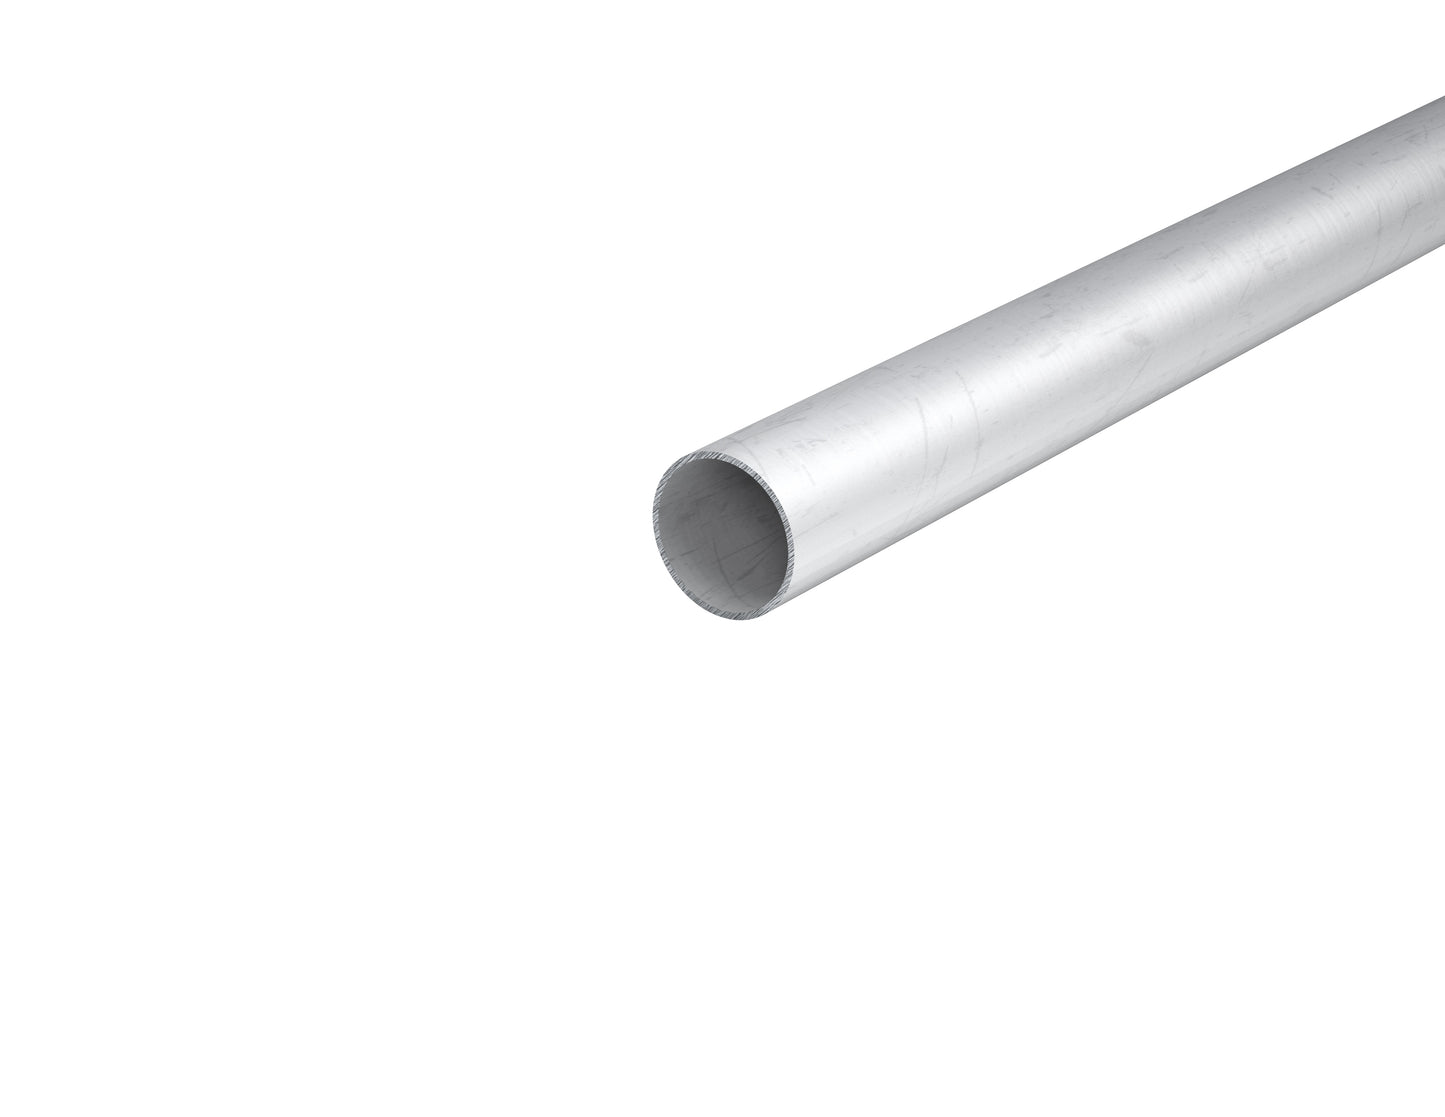 1-3/8" OD .058" wall round aluminum tube, 16 gauge 1.375" aluminum tube, 6063-T832 drawn .058" wall